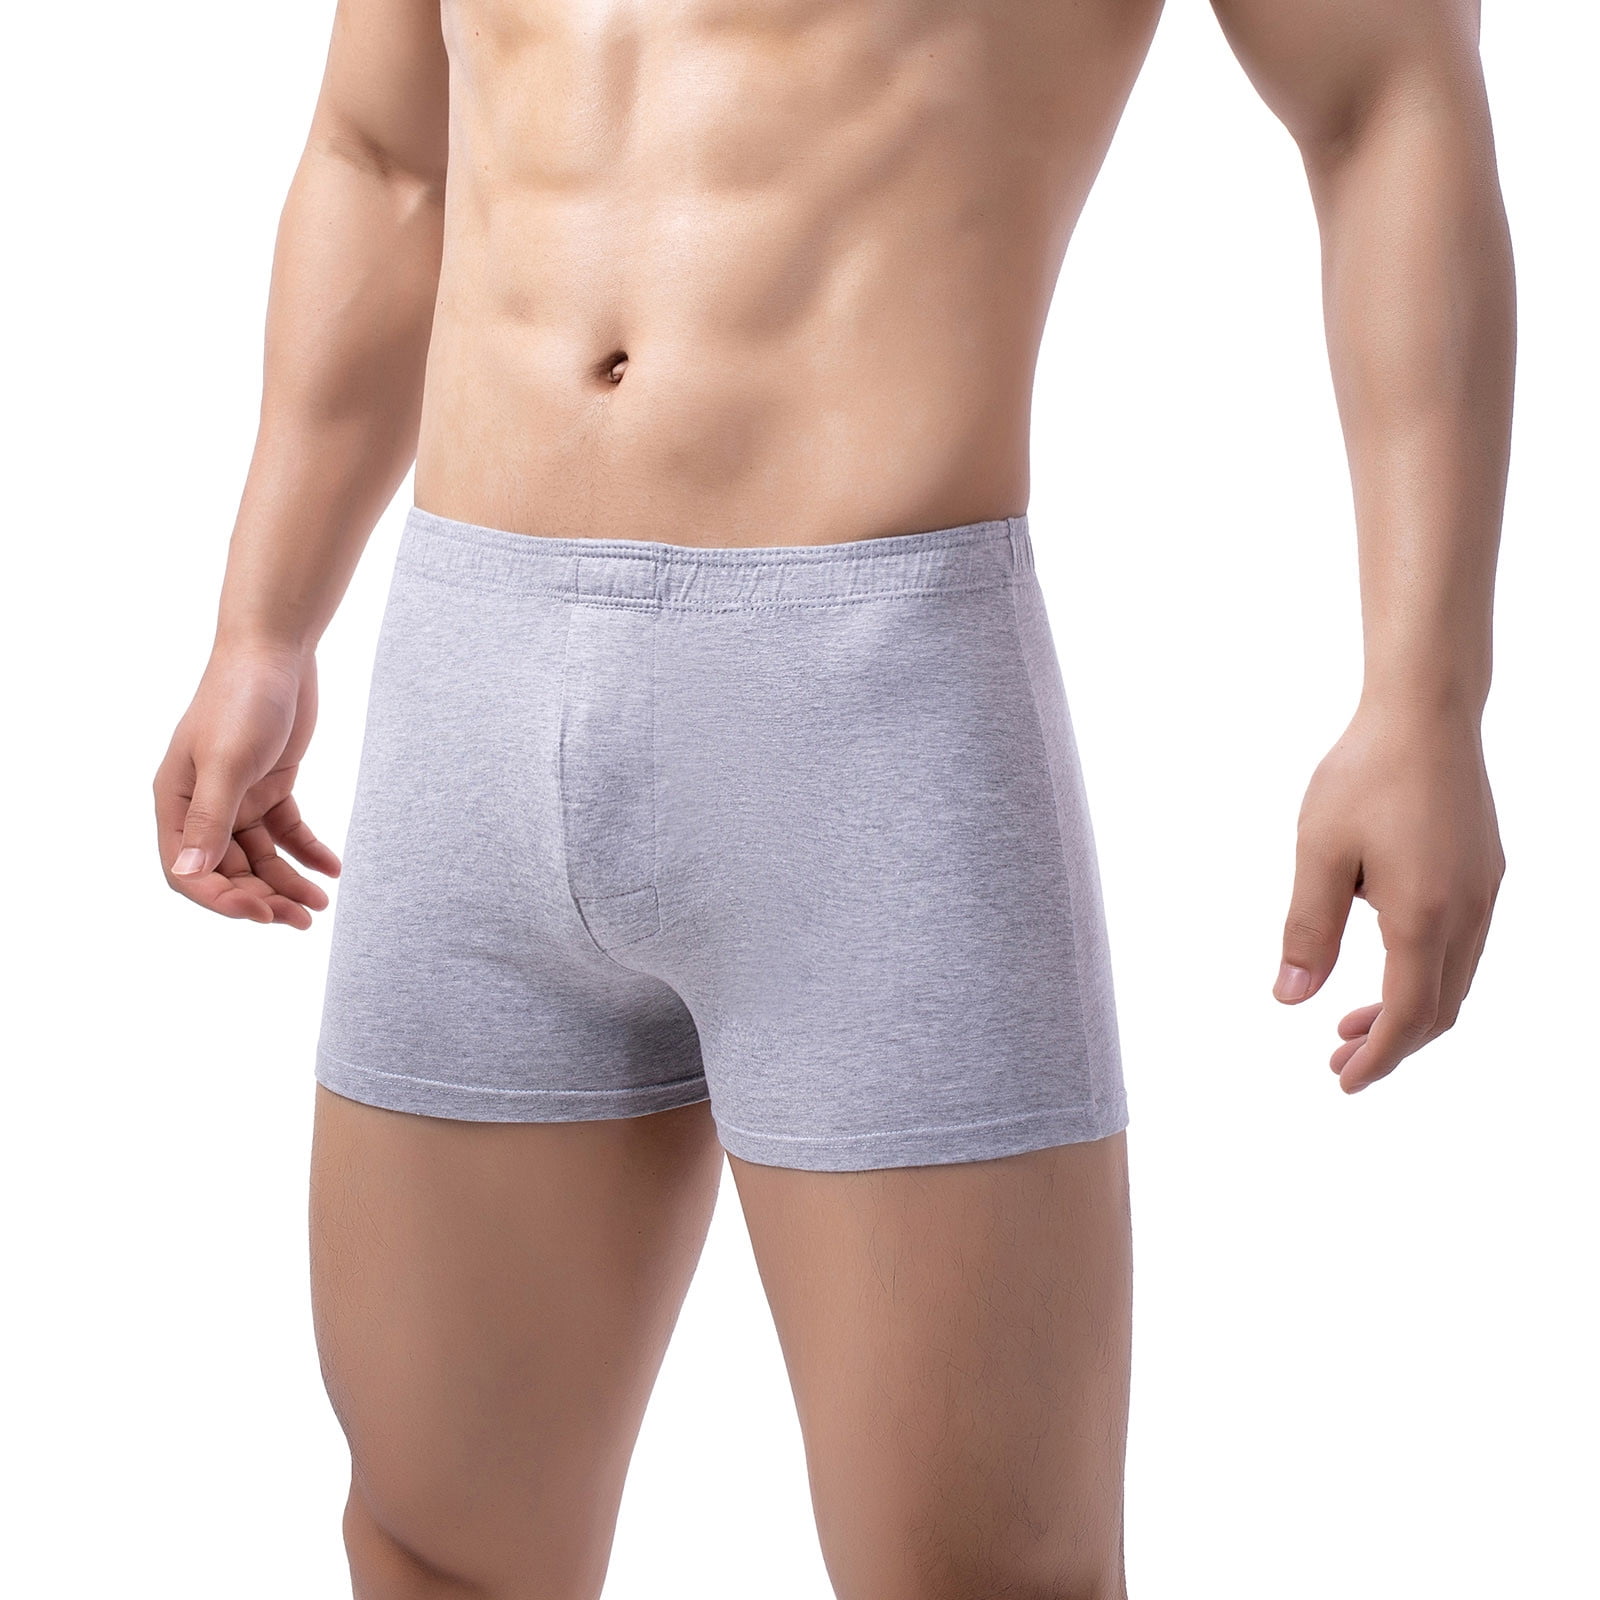 4 Pack Men Big Size Panties Sexy Briefs Underwear Underpants Male Large  Knickers Homme Undershorts Modal Undies Bottom Shorts